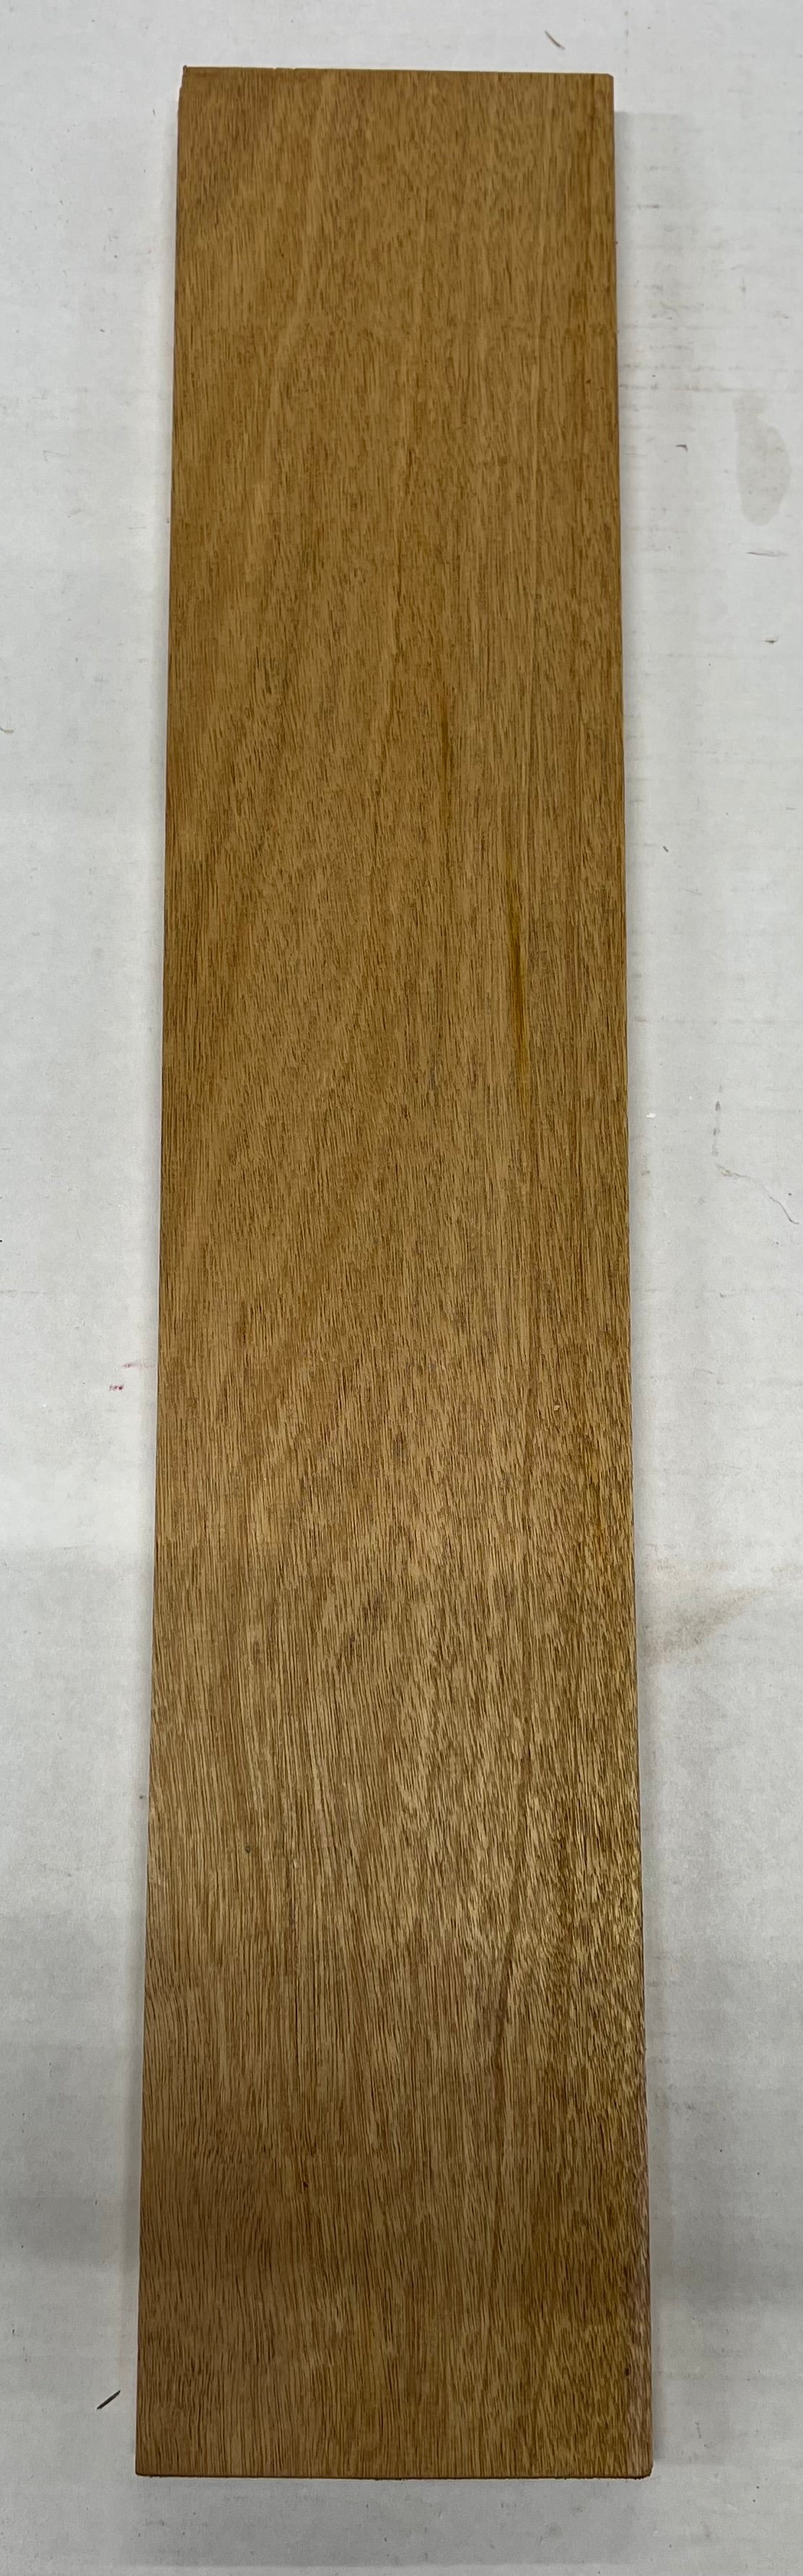 Honduran Mahogany Thin Stock Lumber Board Square Wood Blank 26&quot;x5&quot;x3/4&quot; 